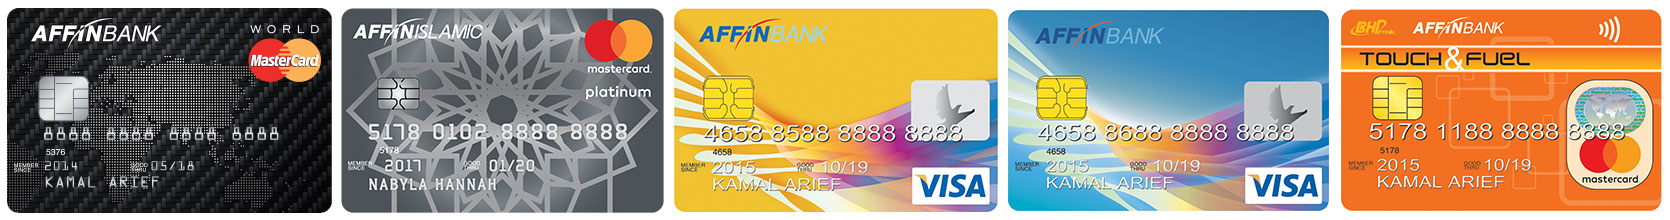 Bank credit card affin Credit Card